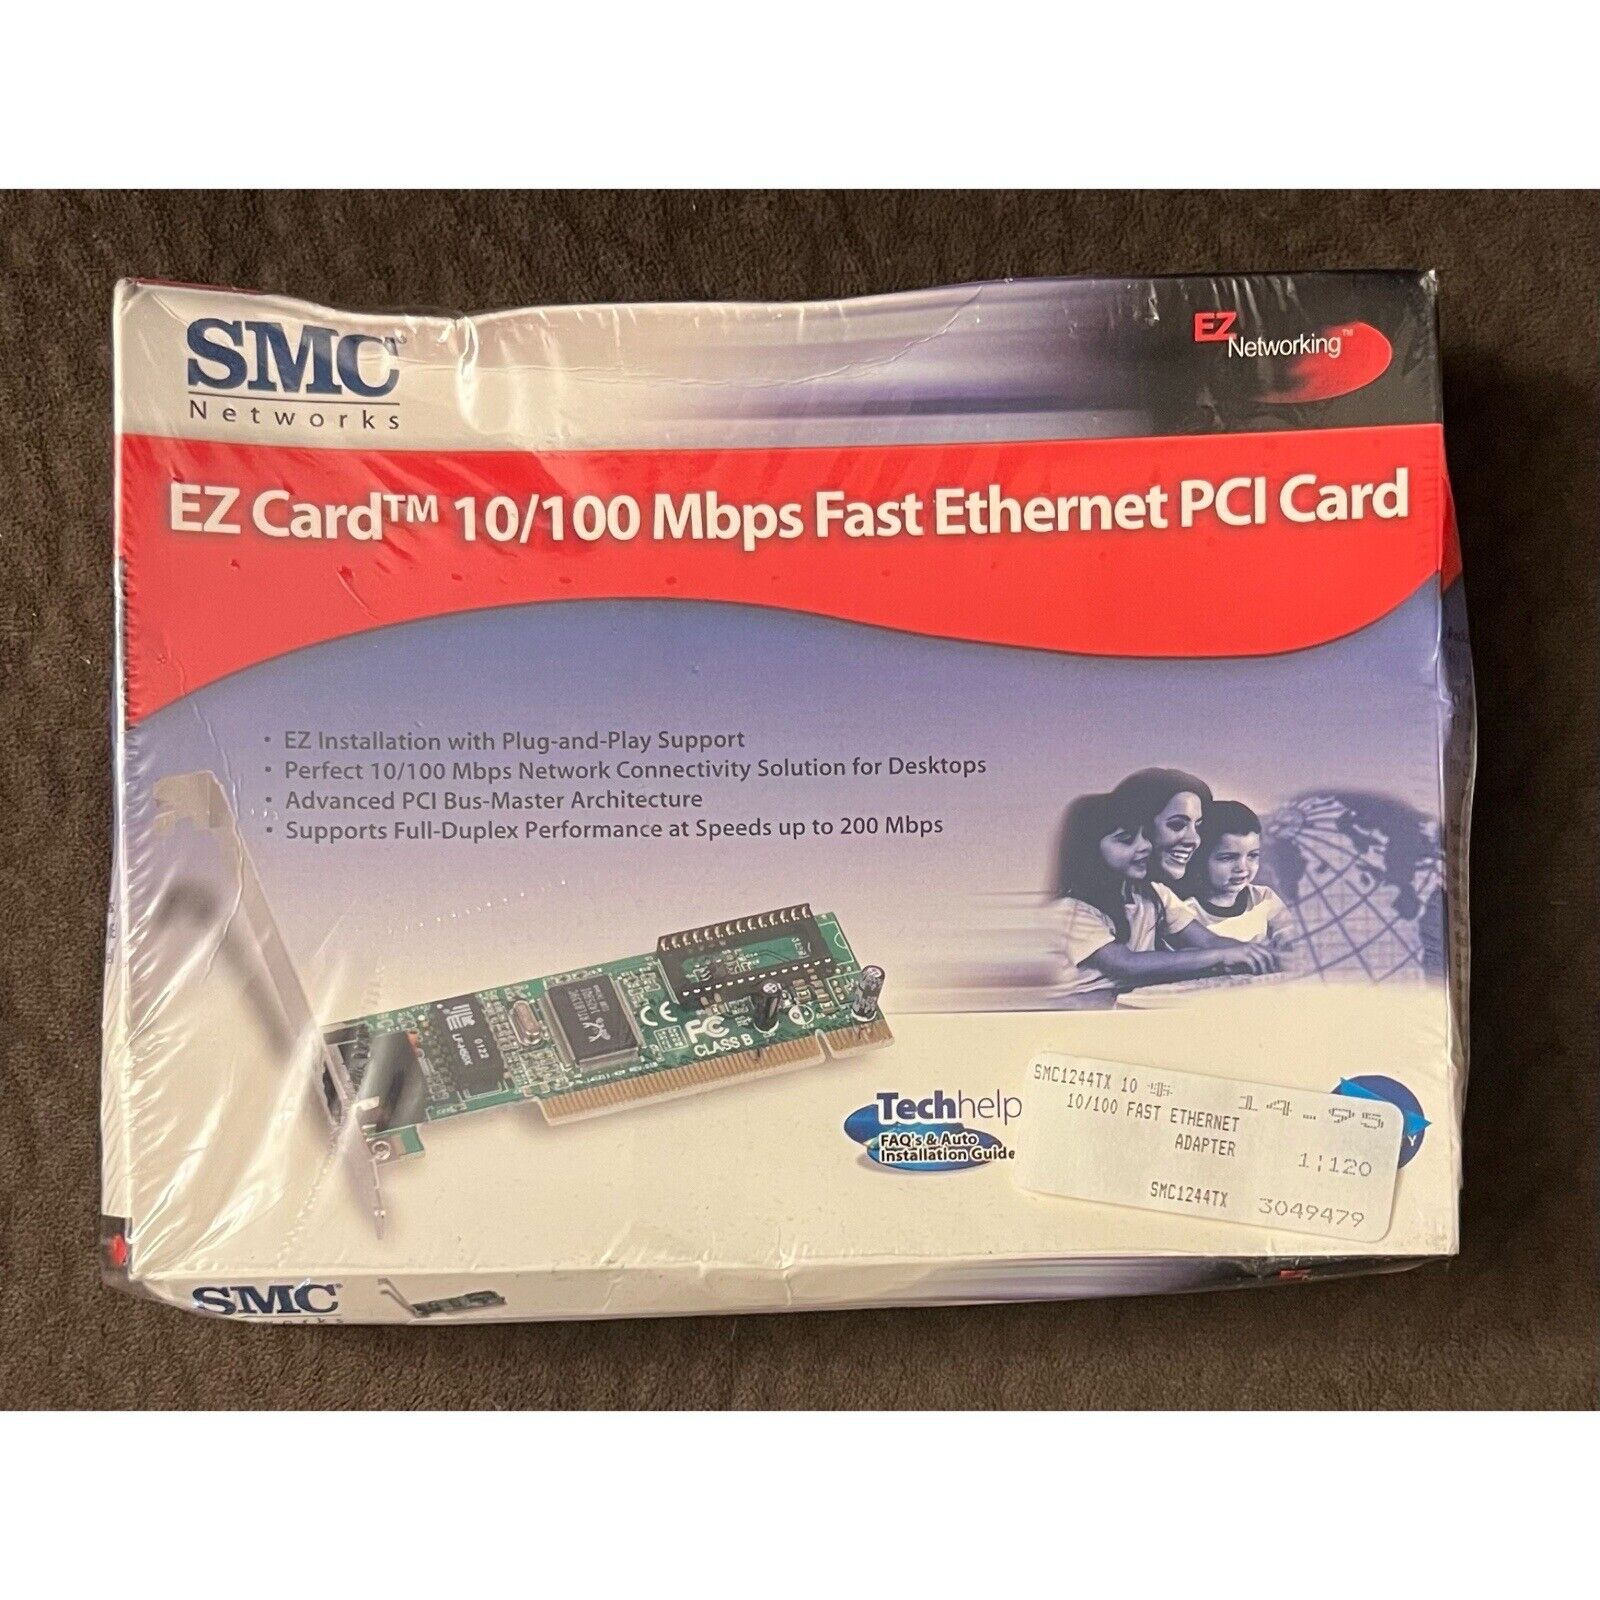 NEW SMC Networks EZ Card 10/100 Mbps Fast Ethernet PCI Cards SMC1244TX 32-bit